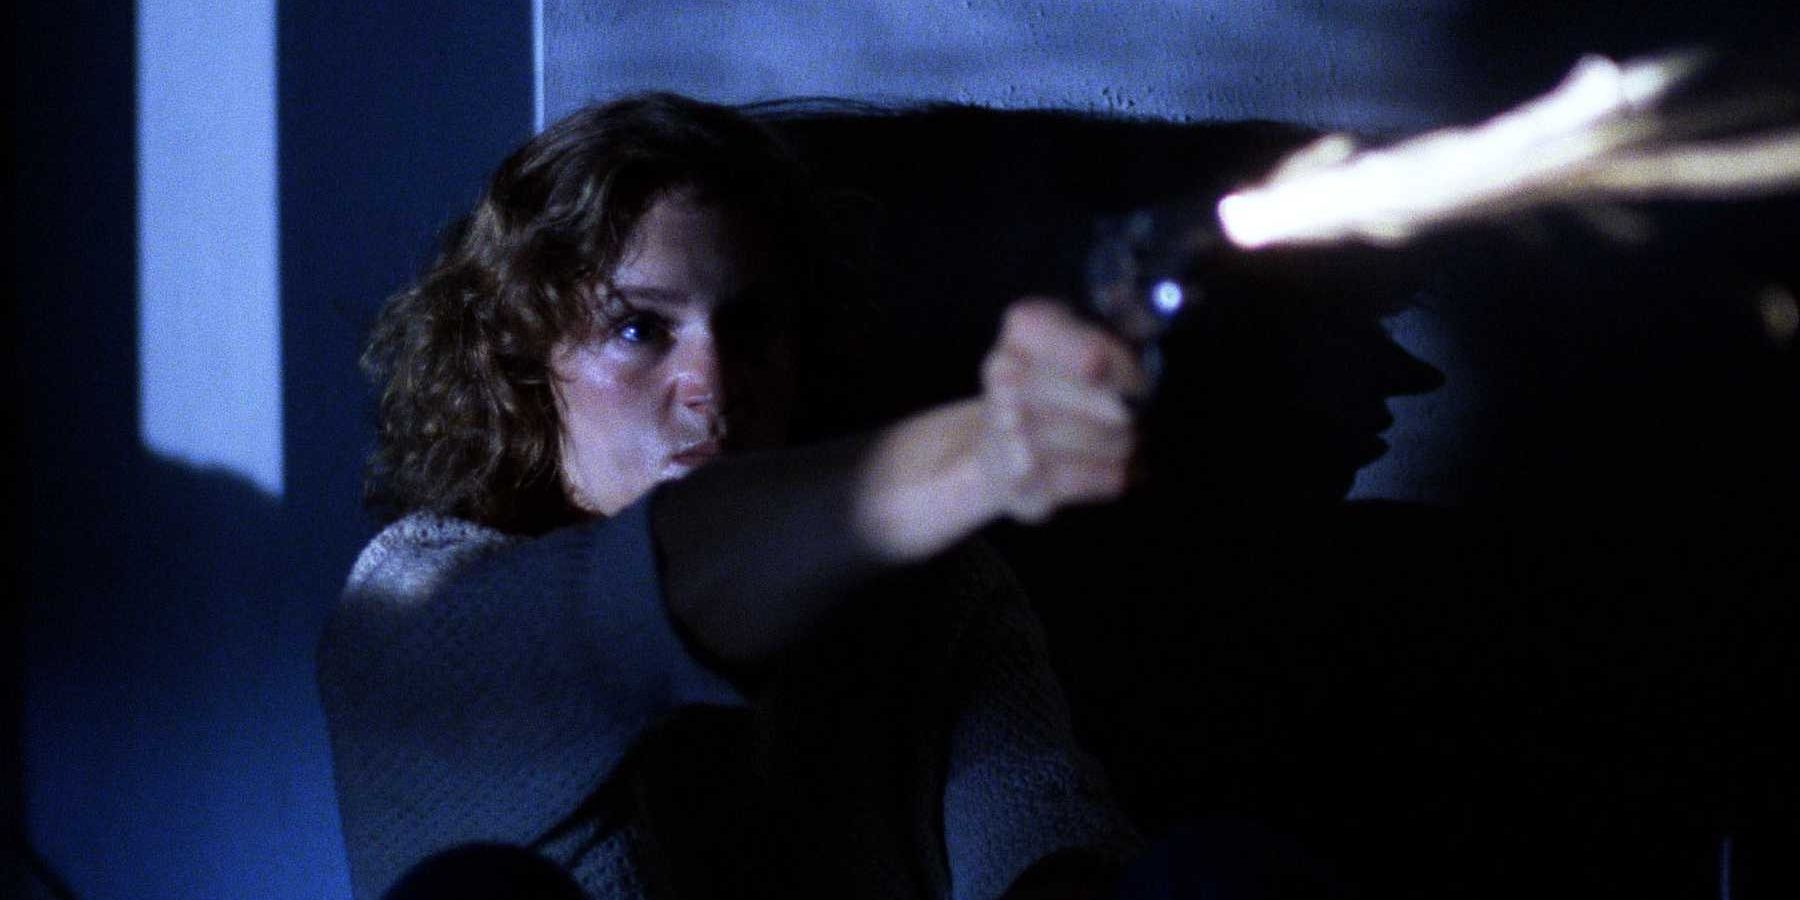 Frances McDormand fires a gun in Blood Simple